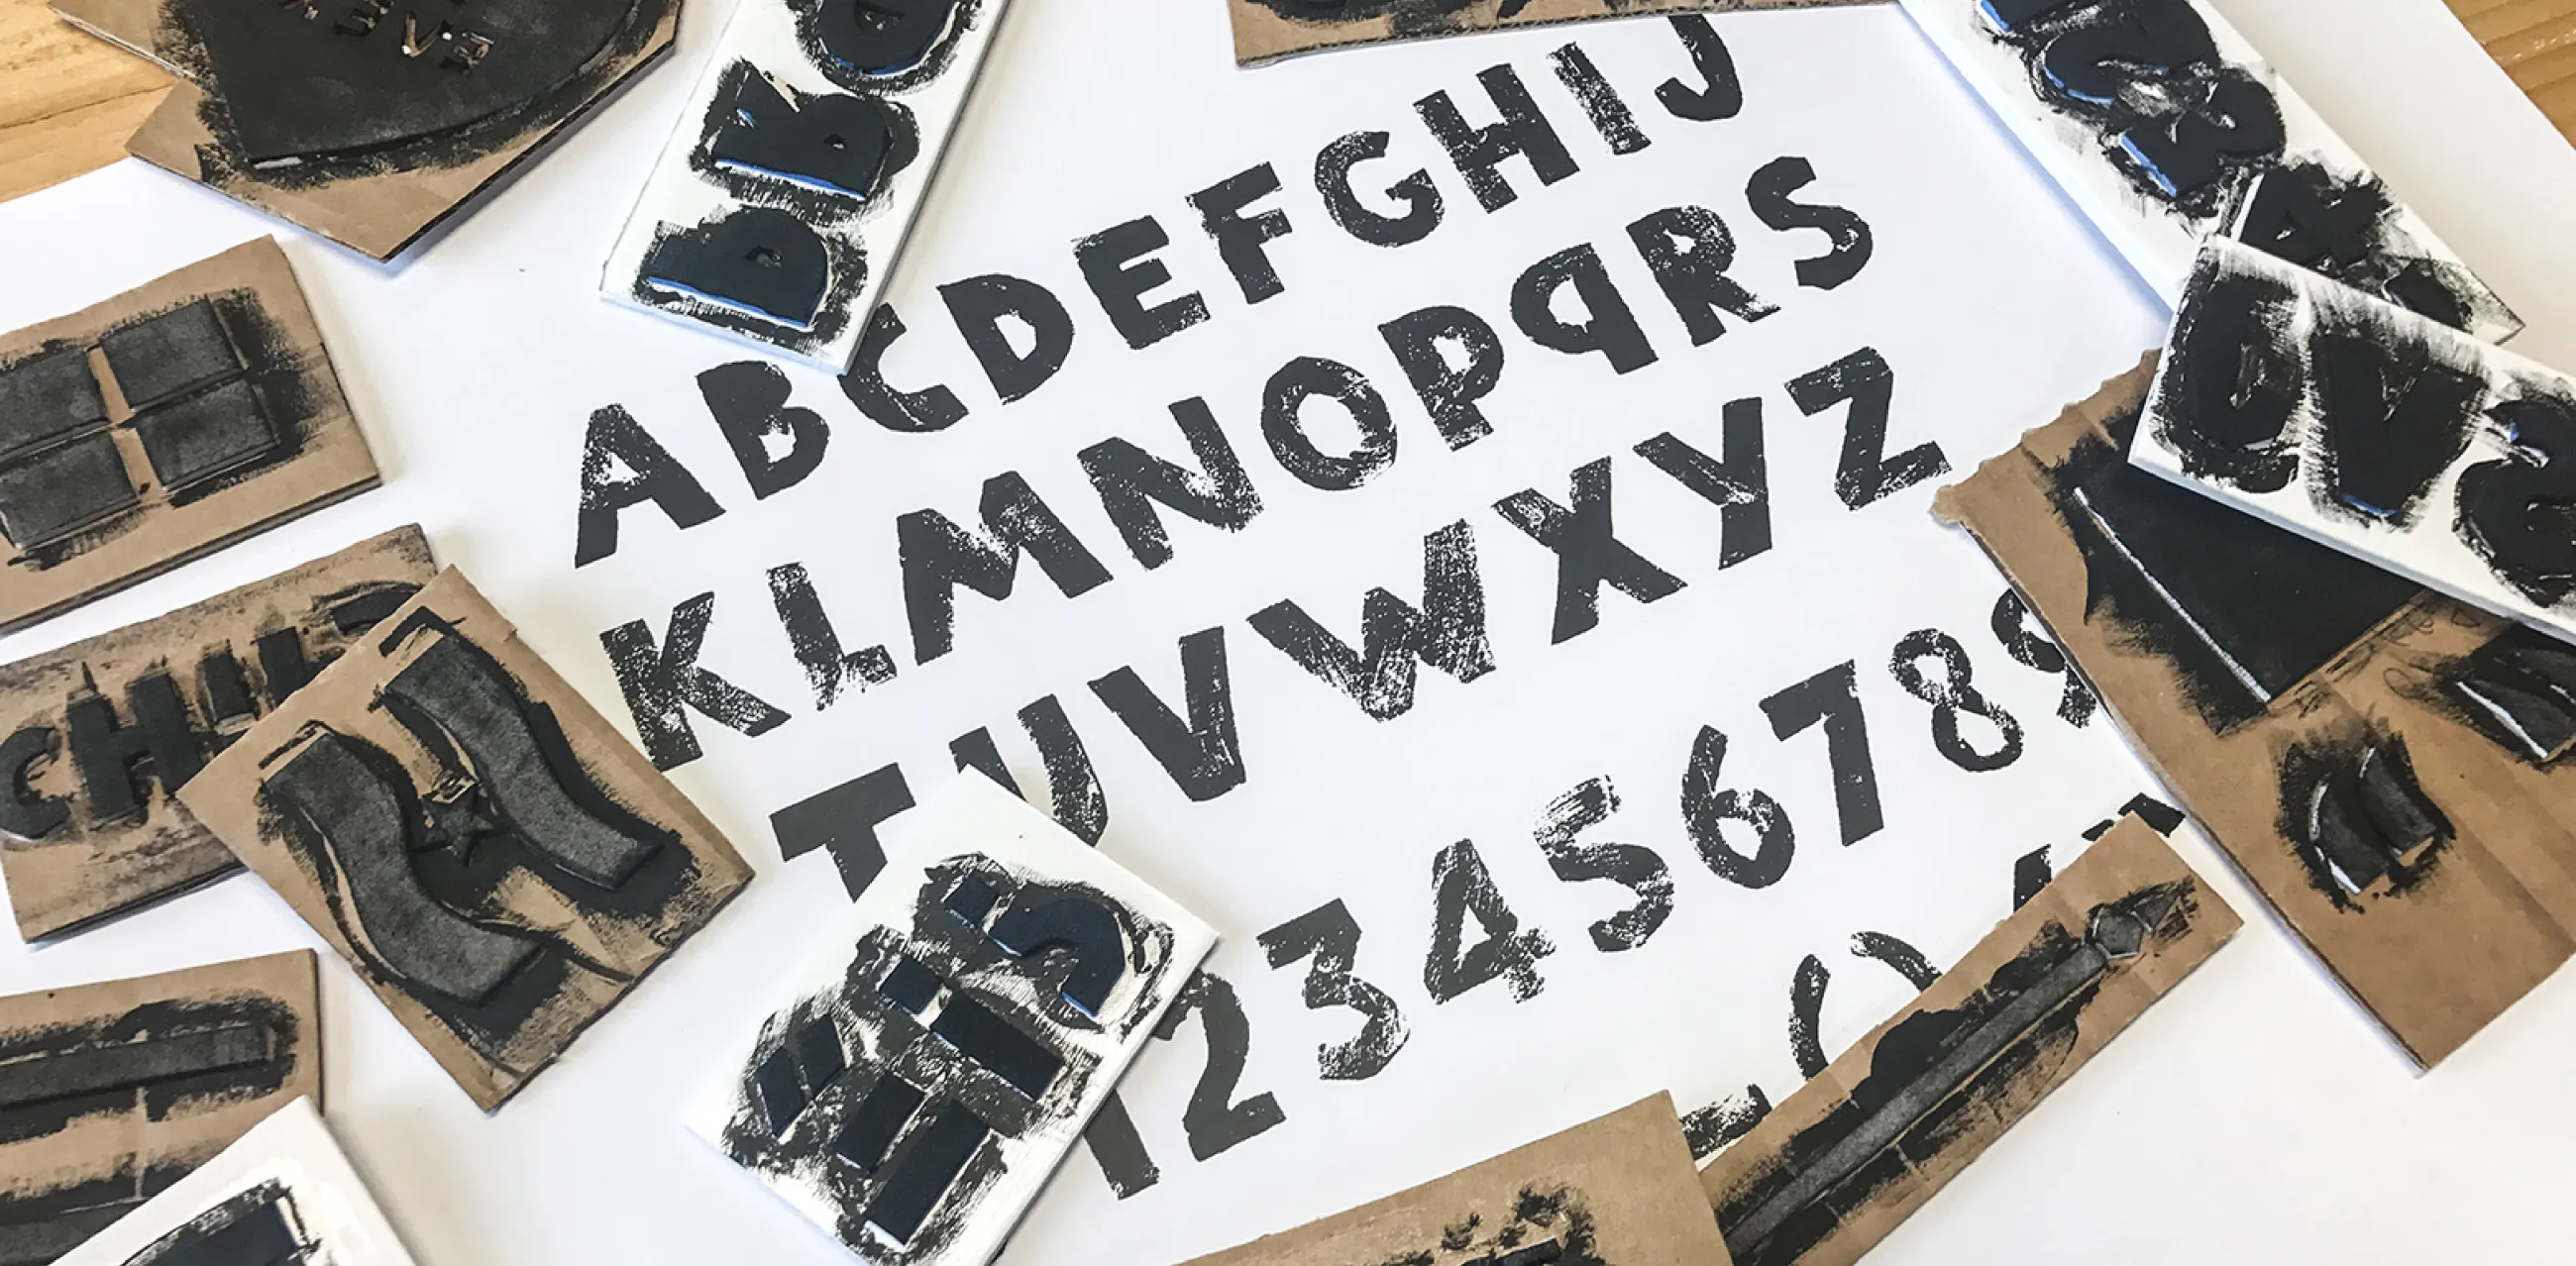 CHIPS bespoke charity brand typeface, showing development using a handmade linocut method